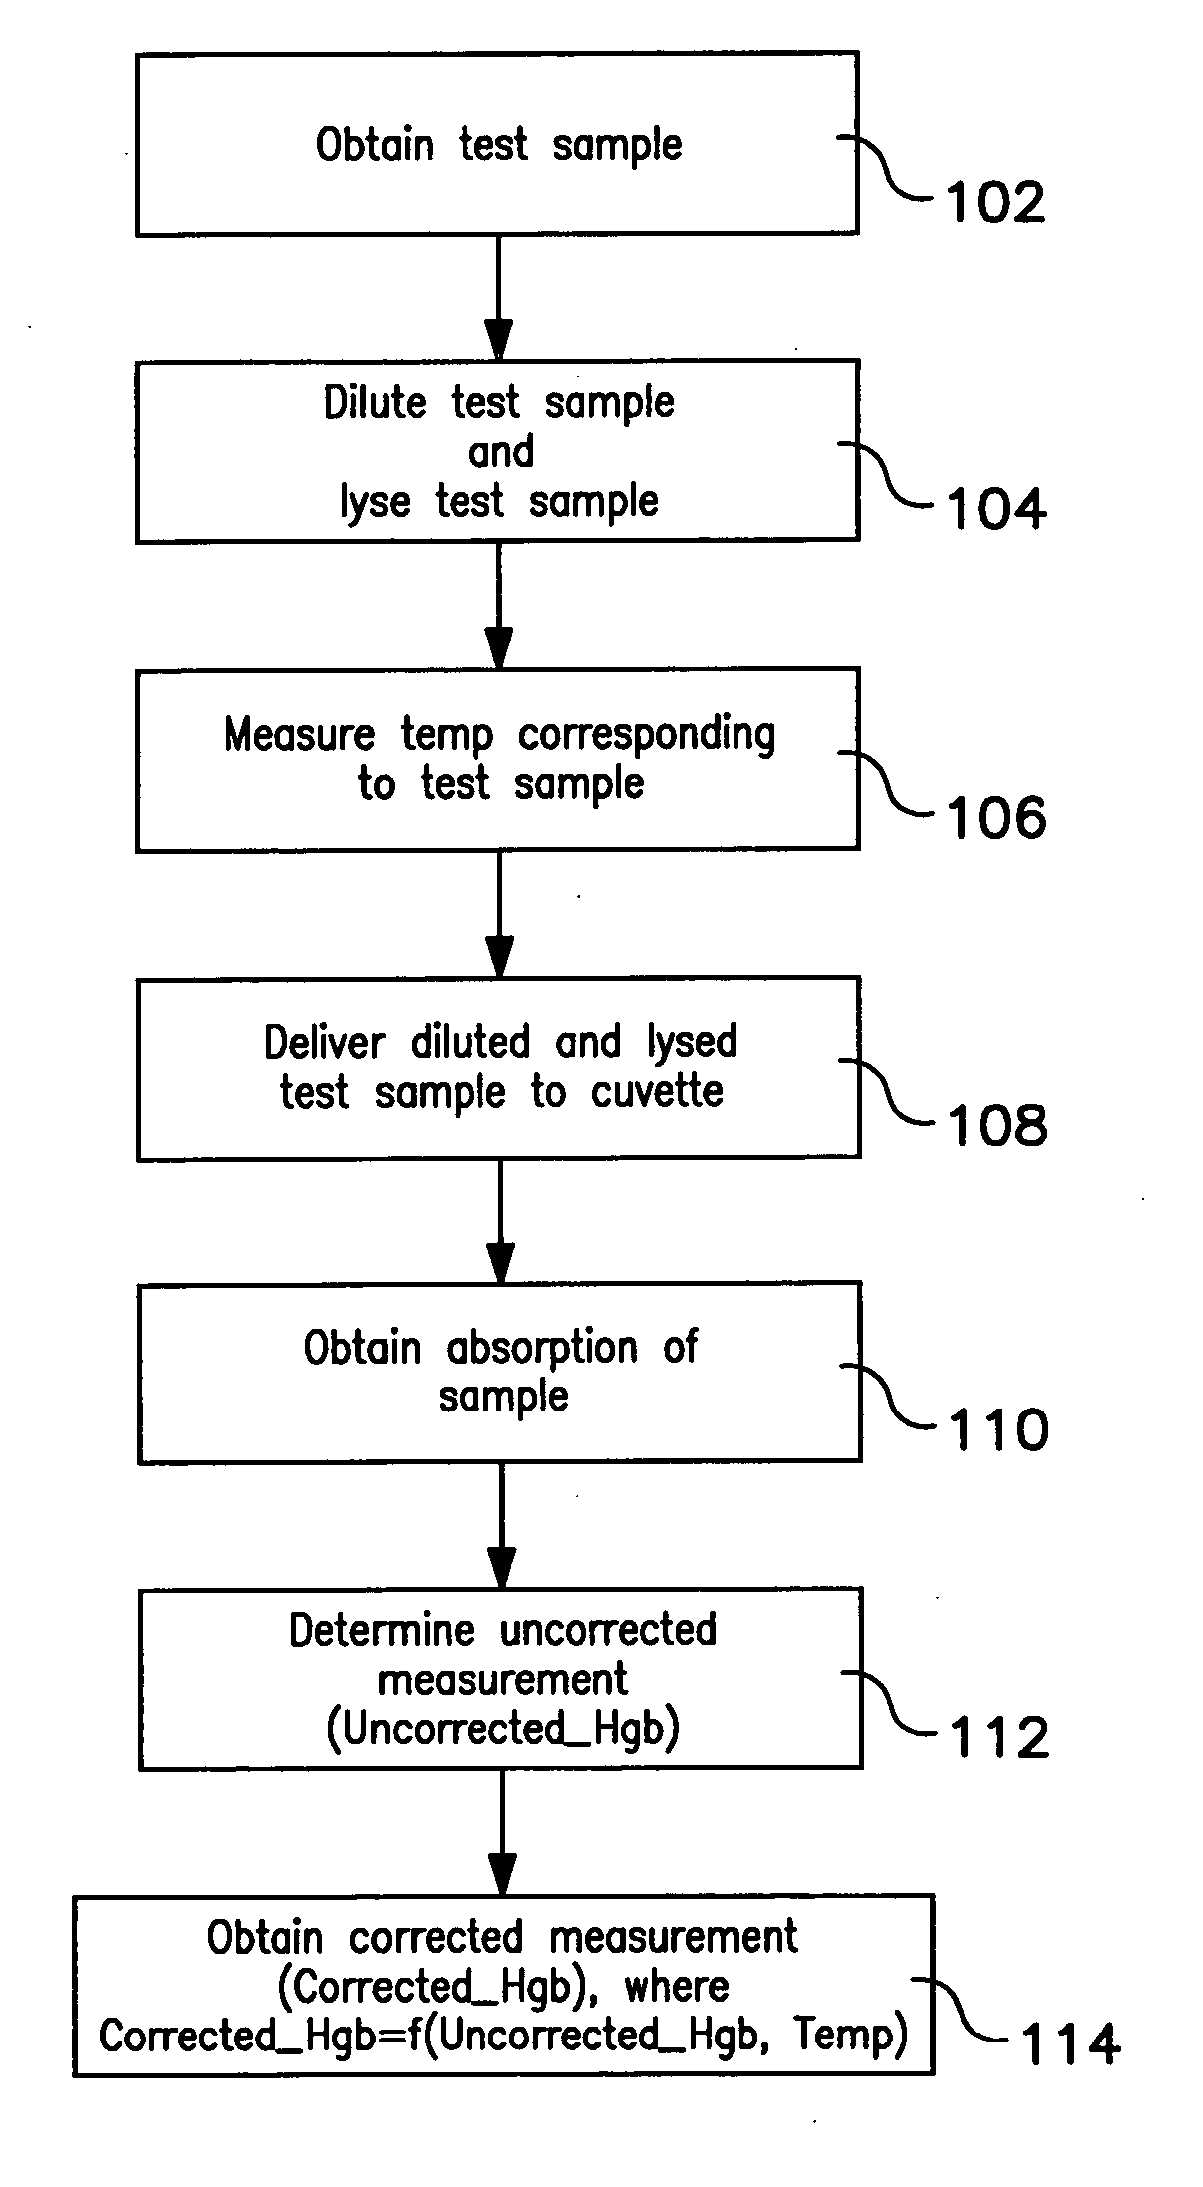 Method of hemoglobin correction due to temperature variation